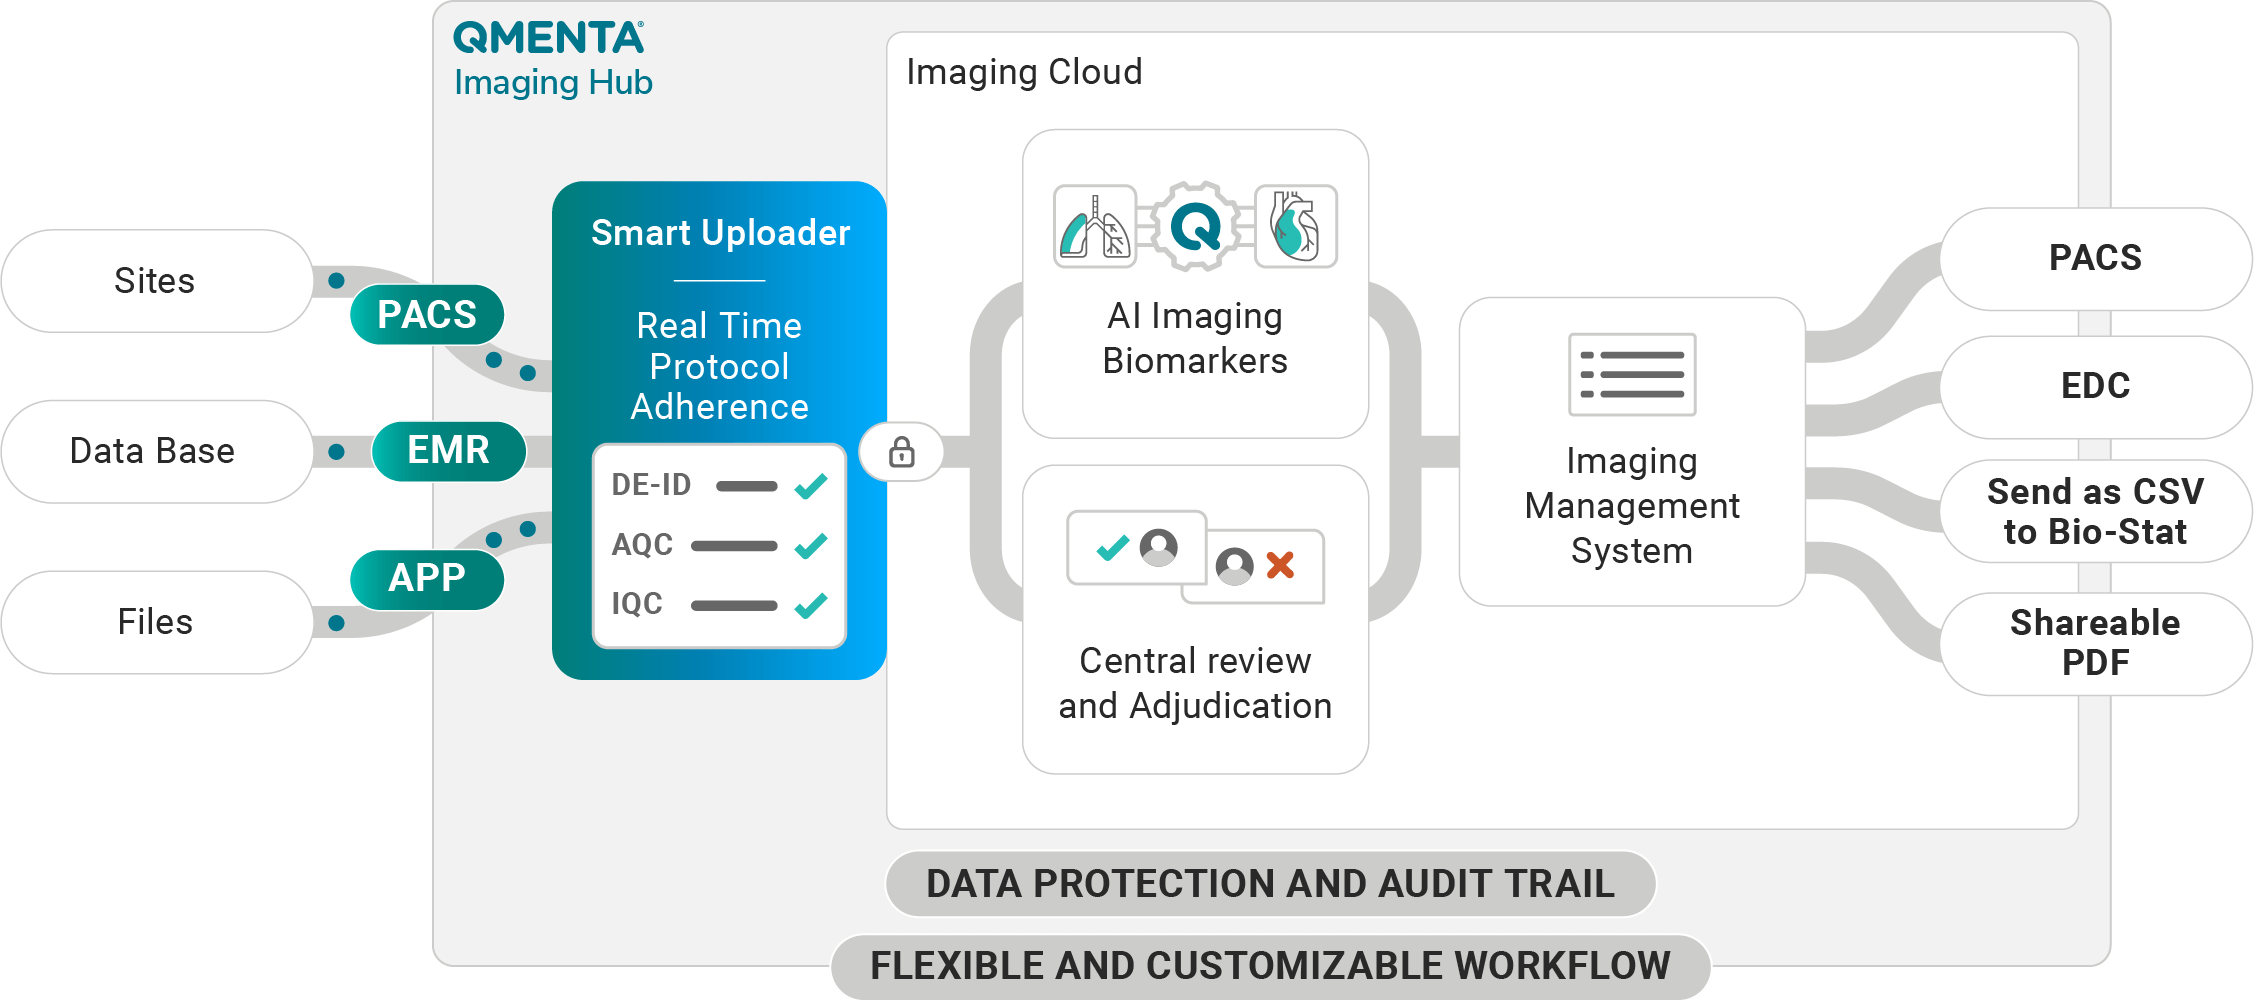 QMENTA-Imaging-Hub-Process-Smart-Uploader-1